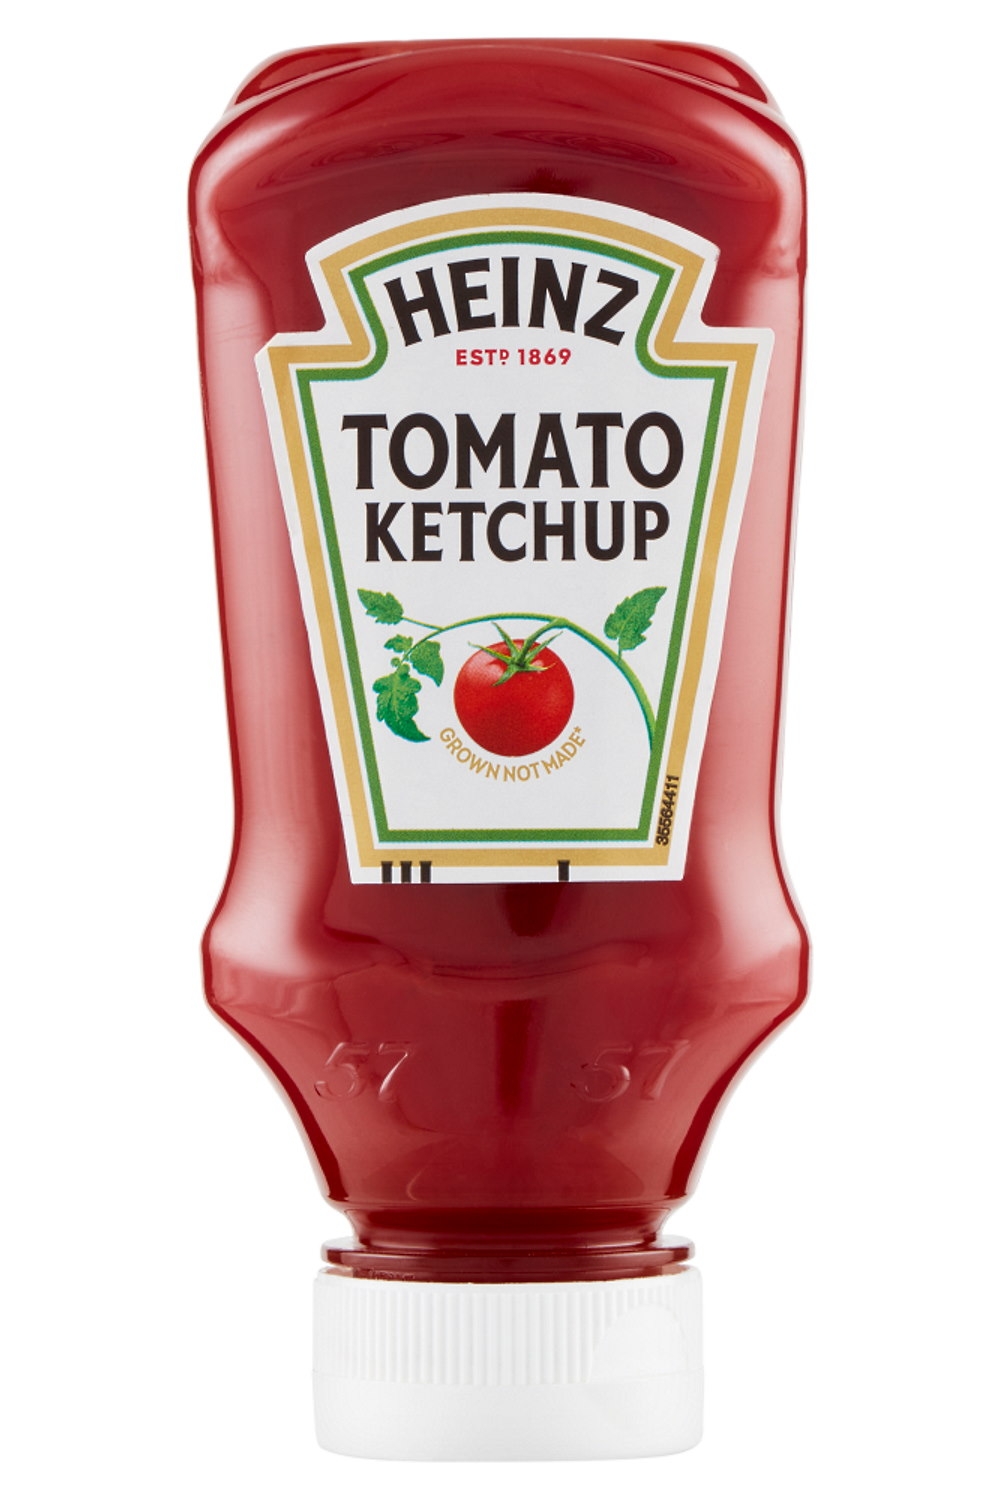 https://karadarshop.com/36748/ketchup-top-down-250g-heinz.jpg